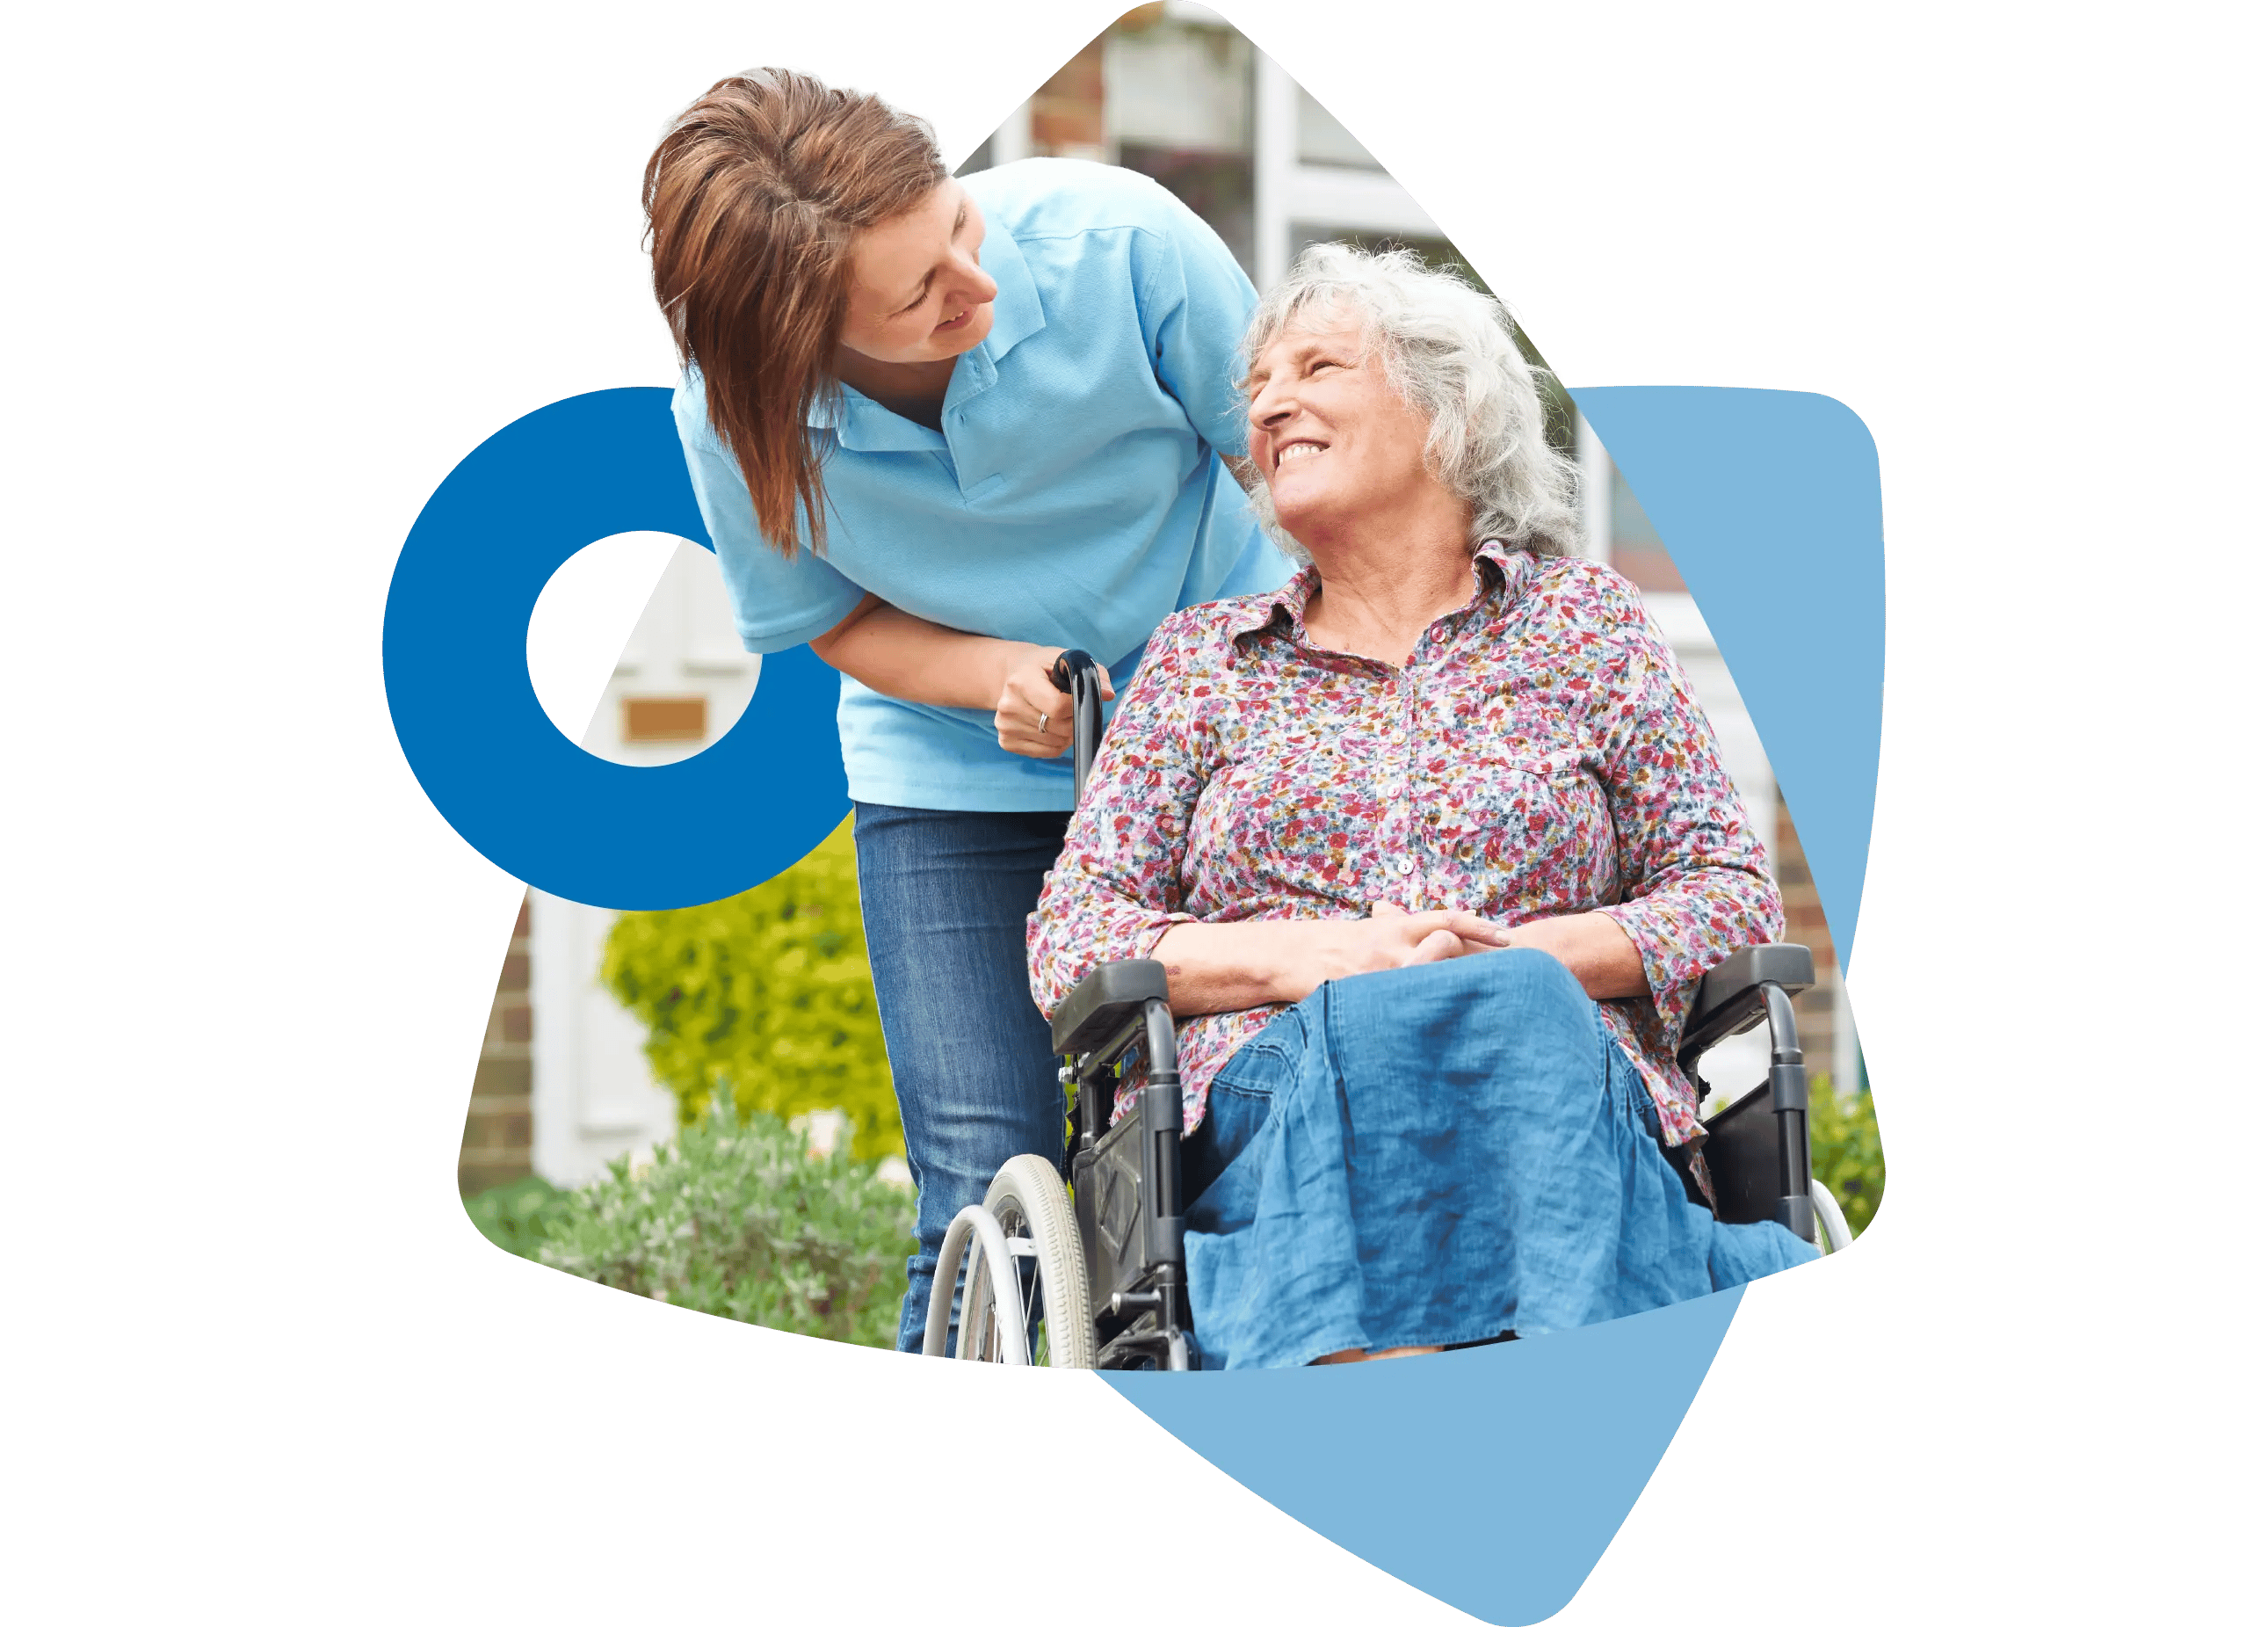 A carer helping a senior woman in a wheelchair